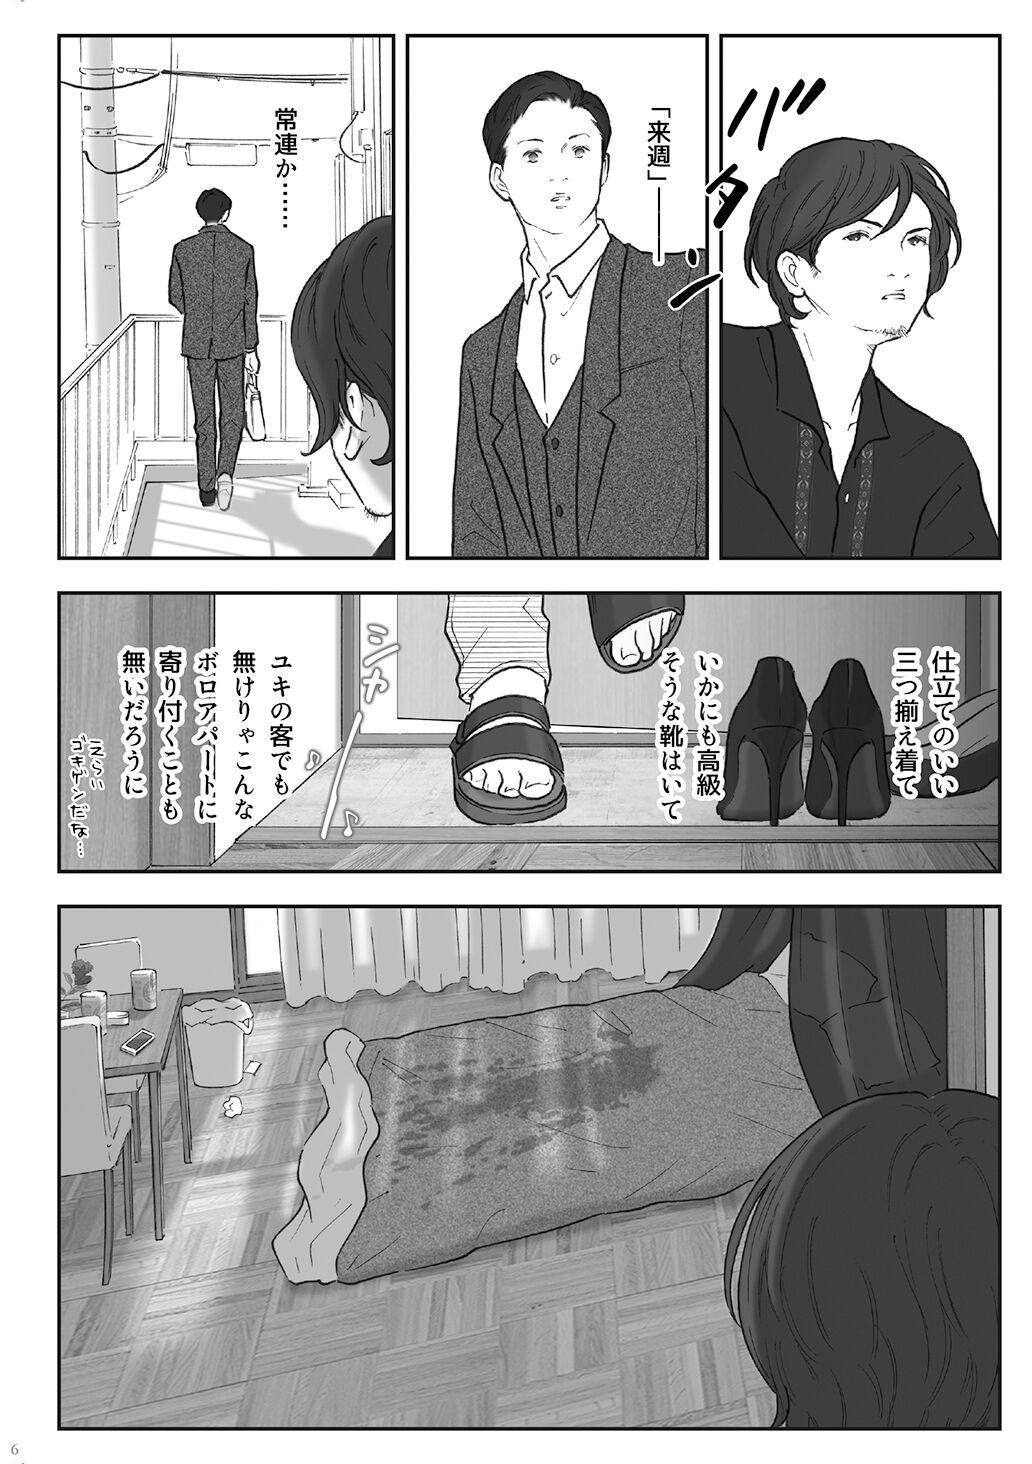 Putas 柘榴 - Original Wanking - Page 6